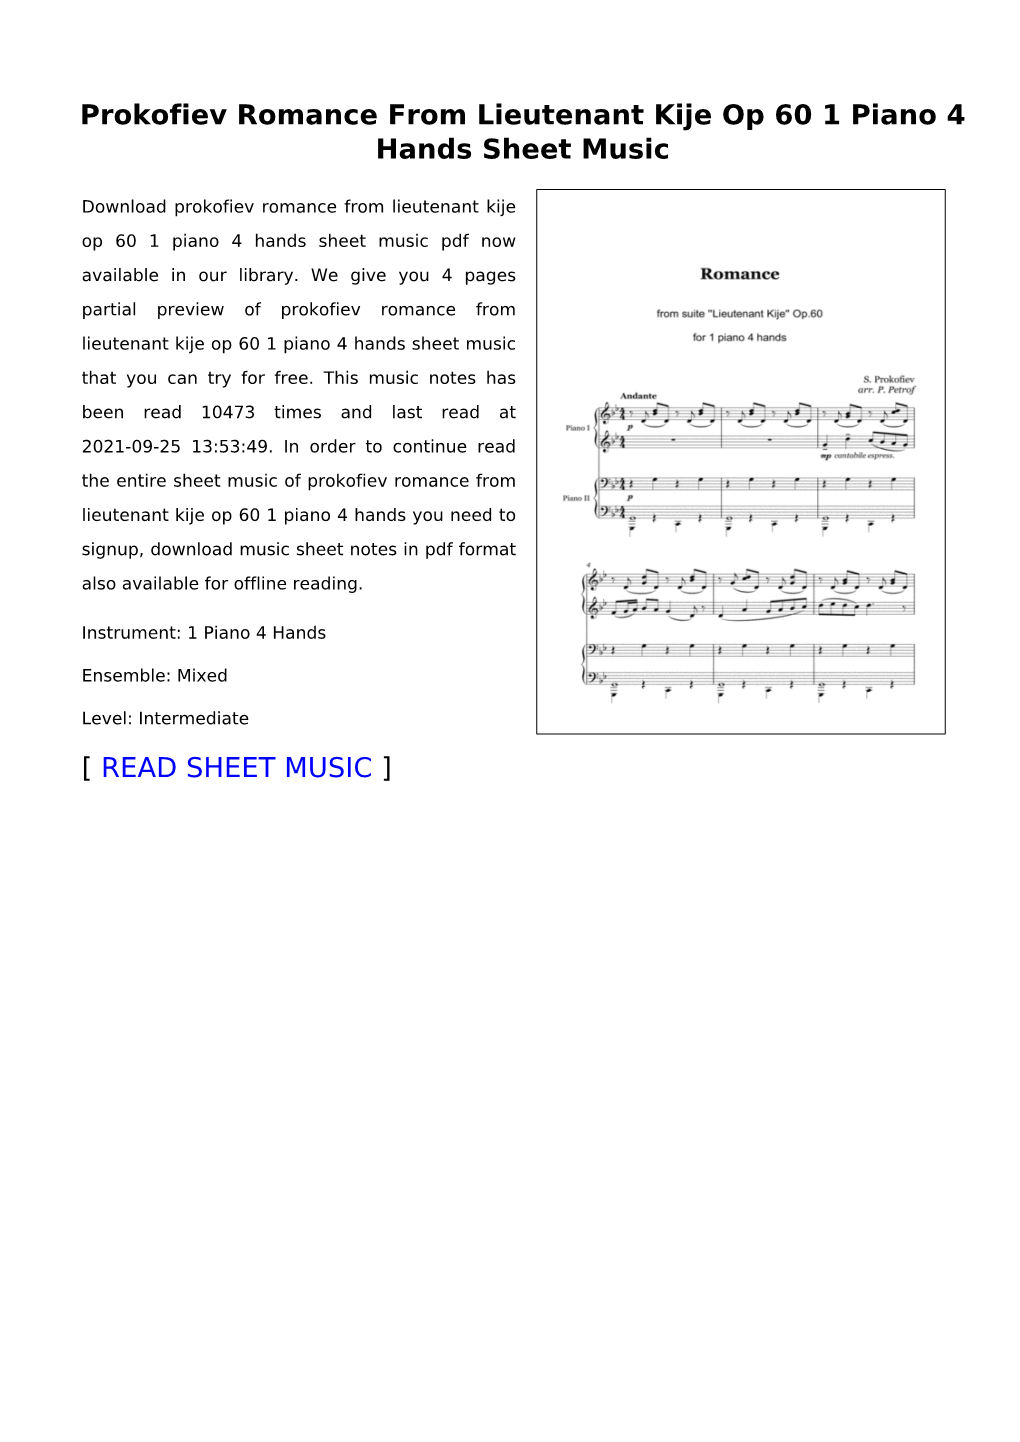 Prokofiev Romance from Lieutenant Kije Op 60 1 Piano 4 Hands Sheet Music